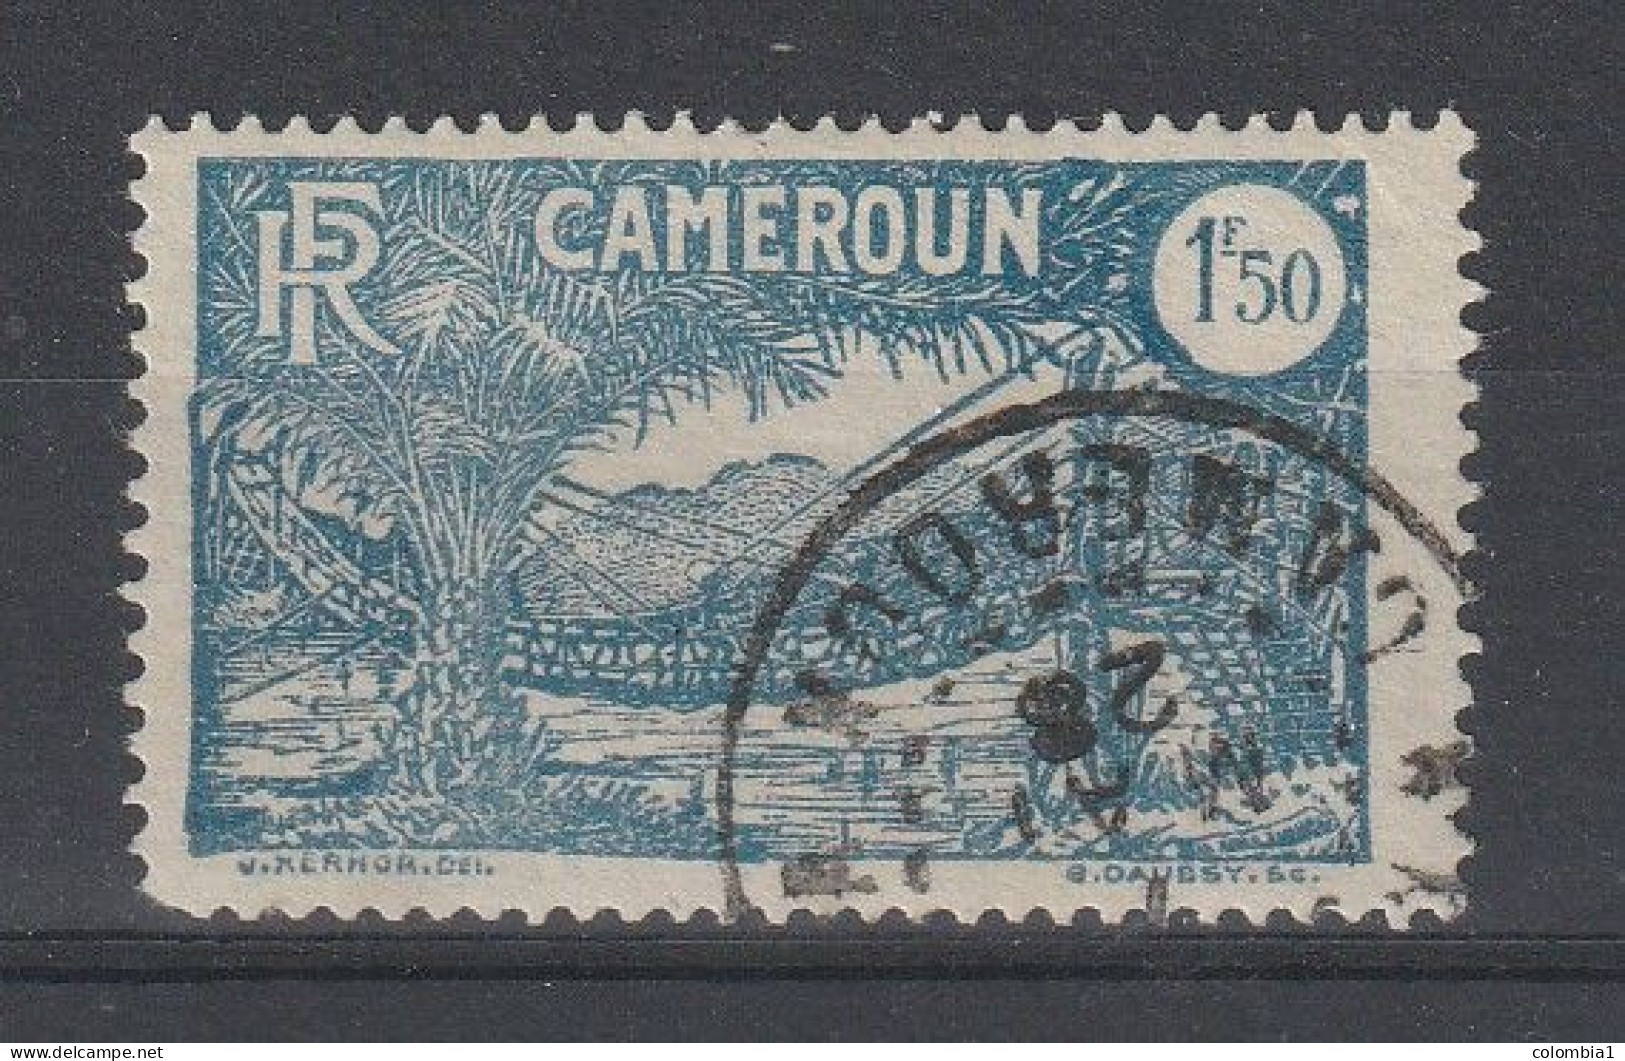 CAMEROUN YT 128 Oblitéré Mai 1928 - Used Stamps